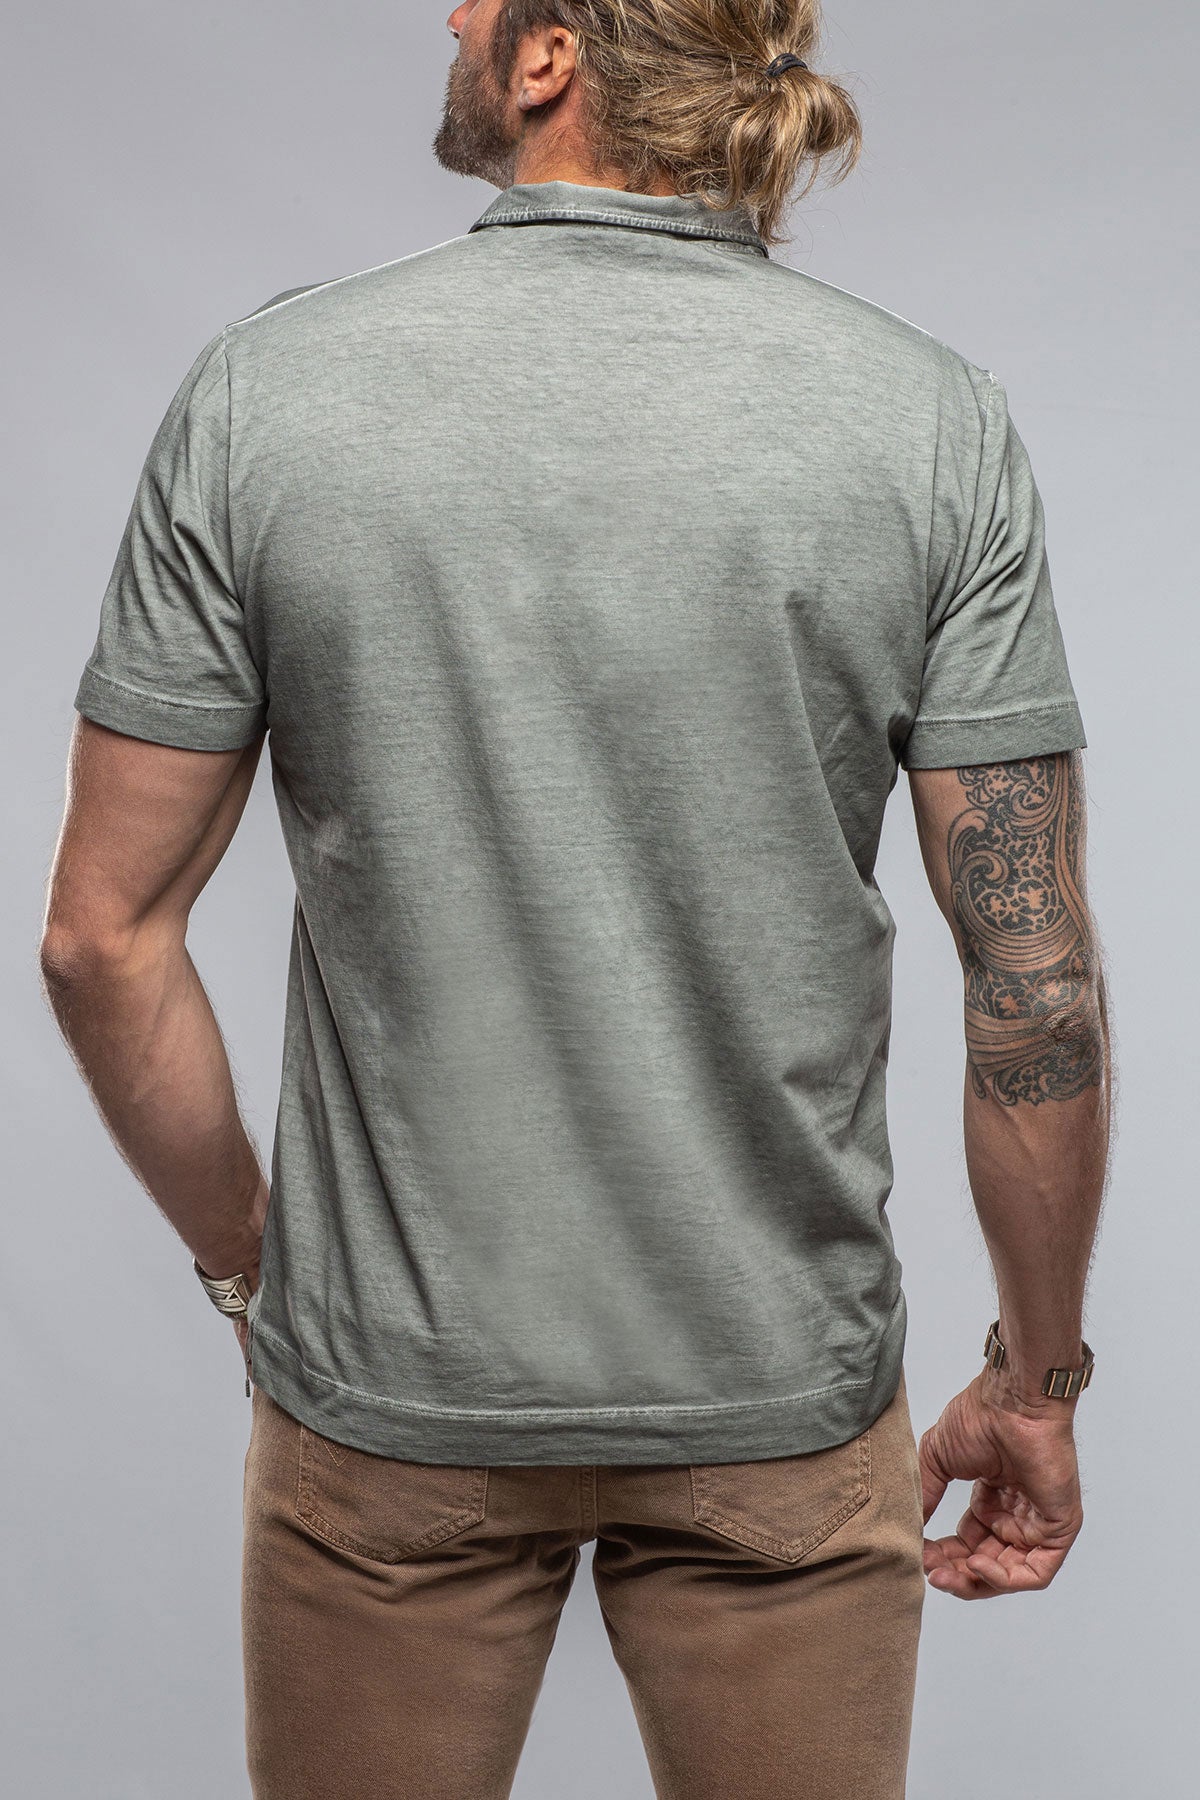 Soho Polo in Steel Grey | Mens - Shirts - Polos | Gimo's Cotton